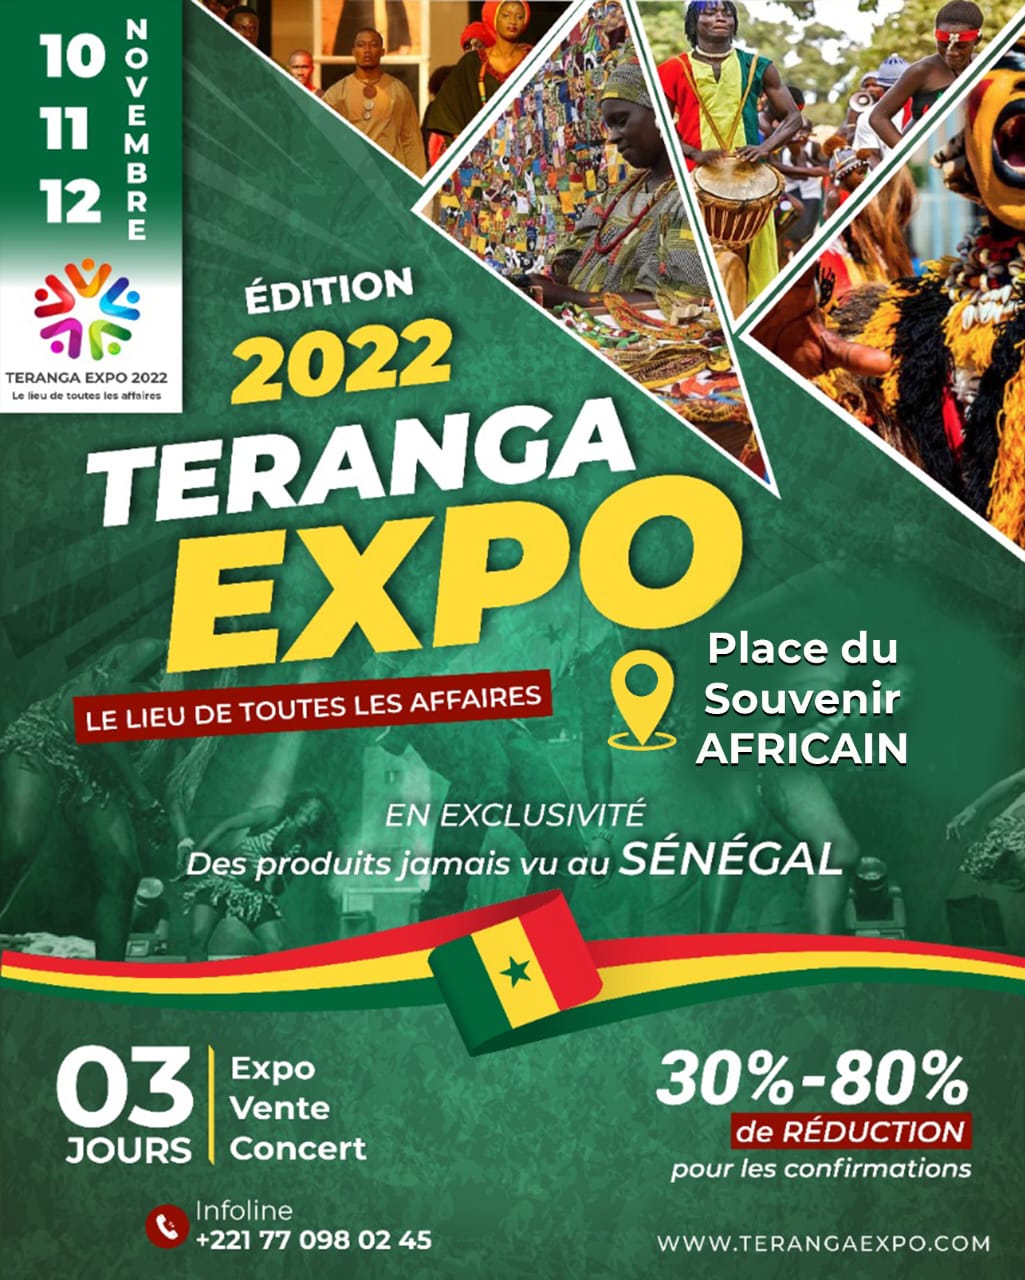 TERANGA EXPO ÉDITION 2022 C